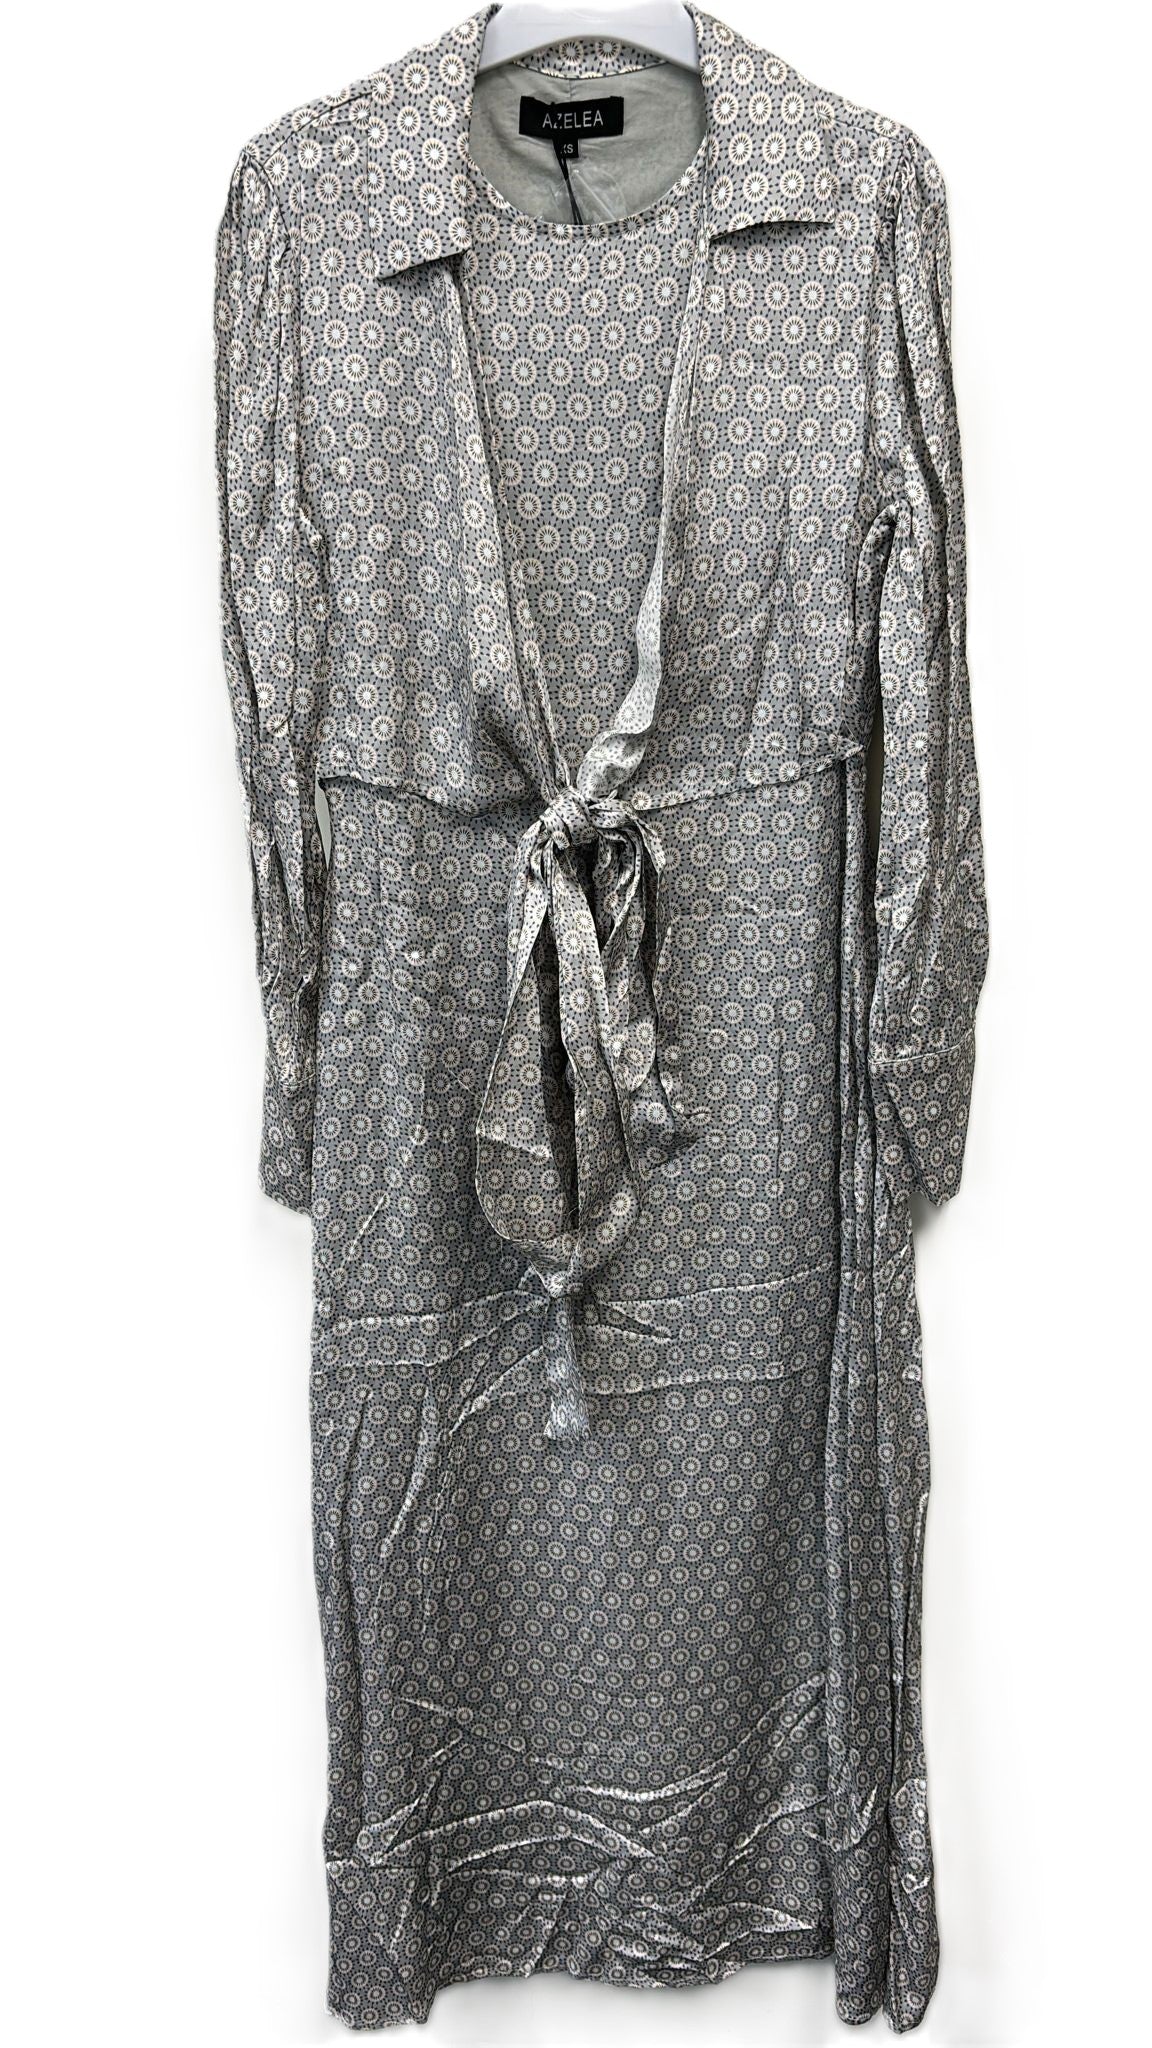 Gray Print Dress With Cuff